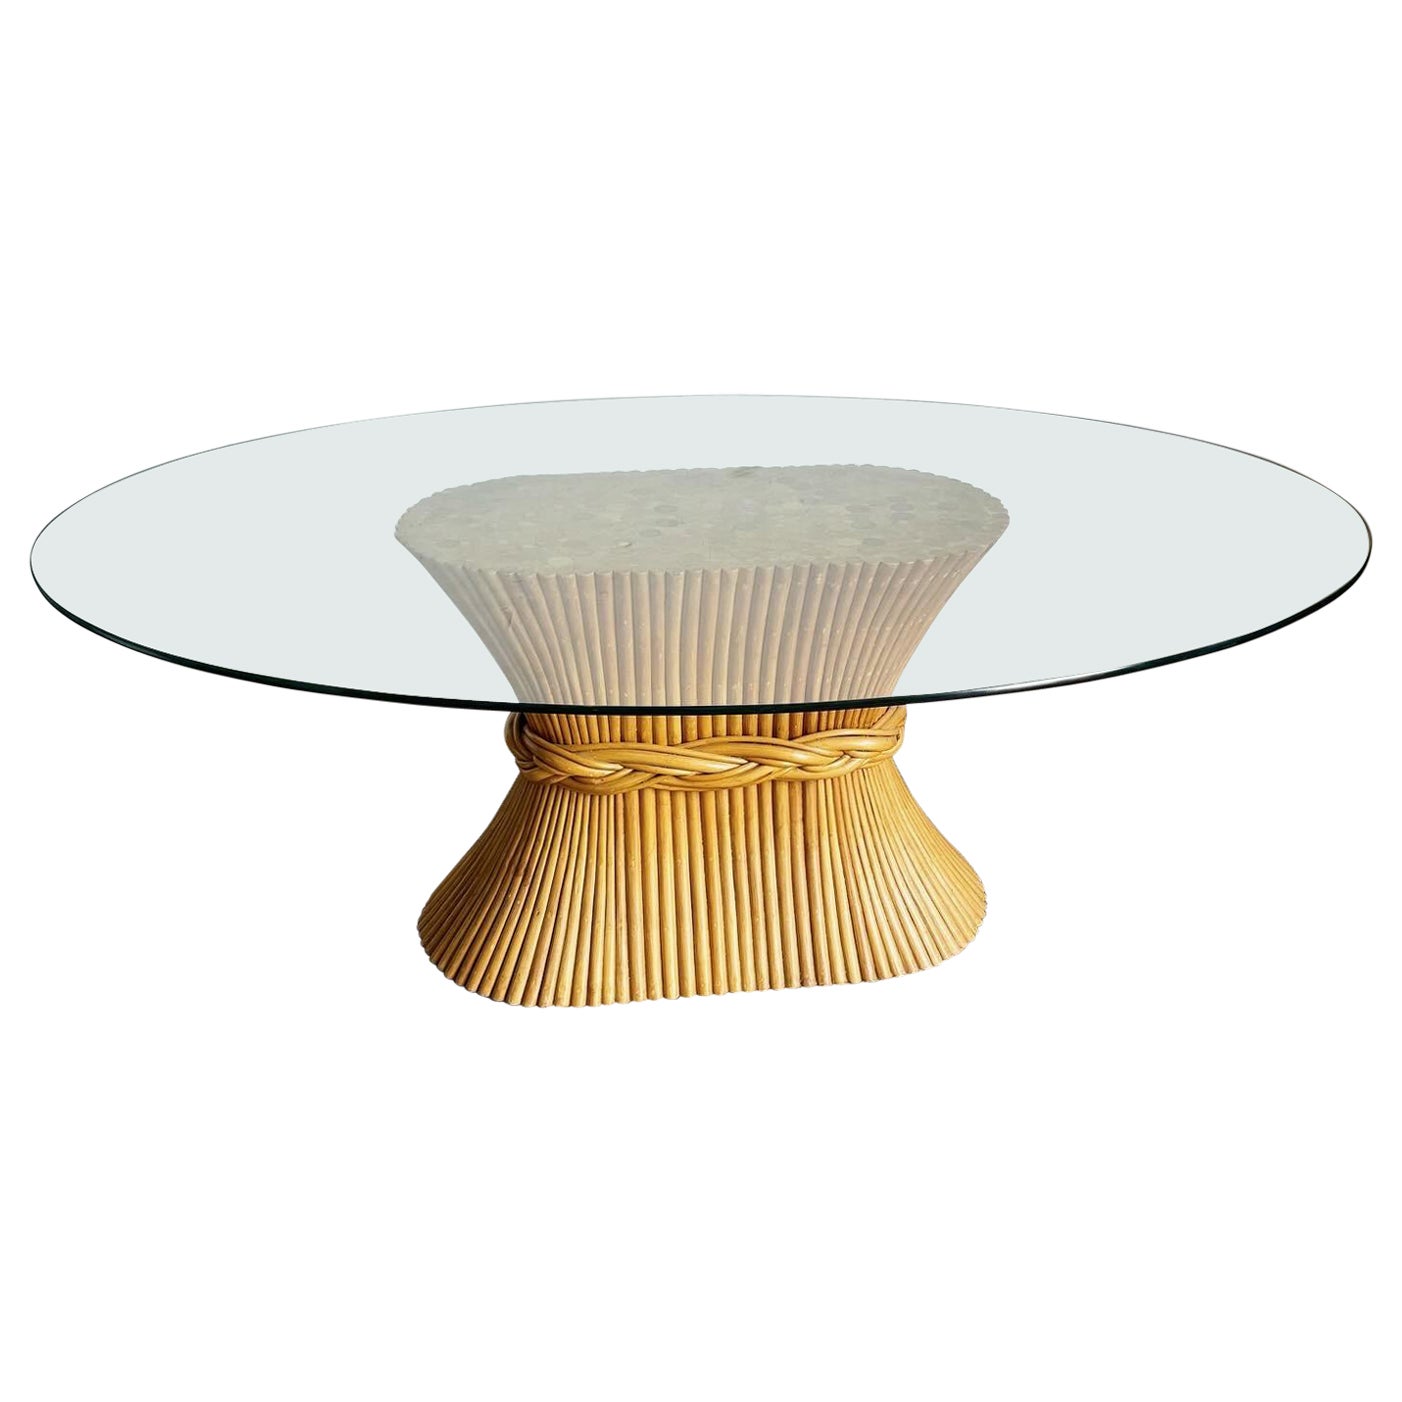 Boho Chic McGuire Style ‚ÄúSheaf of Wheat‚Äù Rattan Oval Glass Top Dining Table For Sale